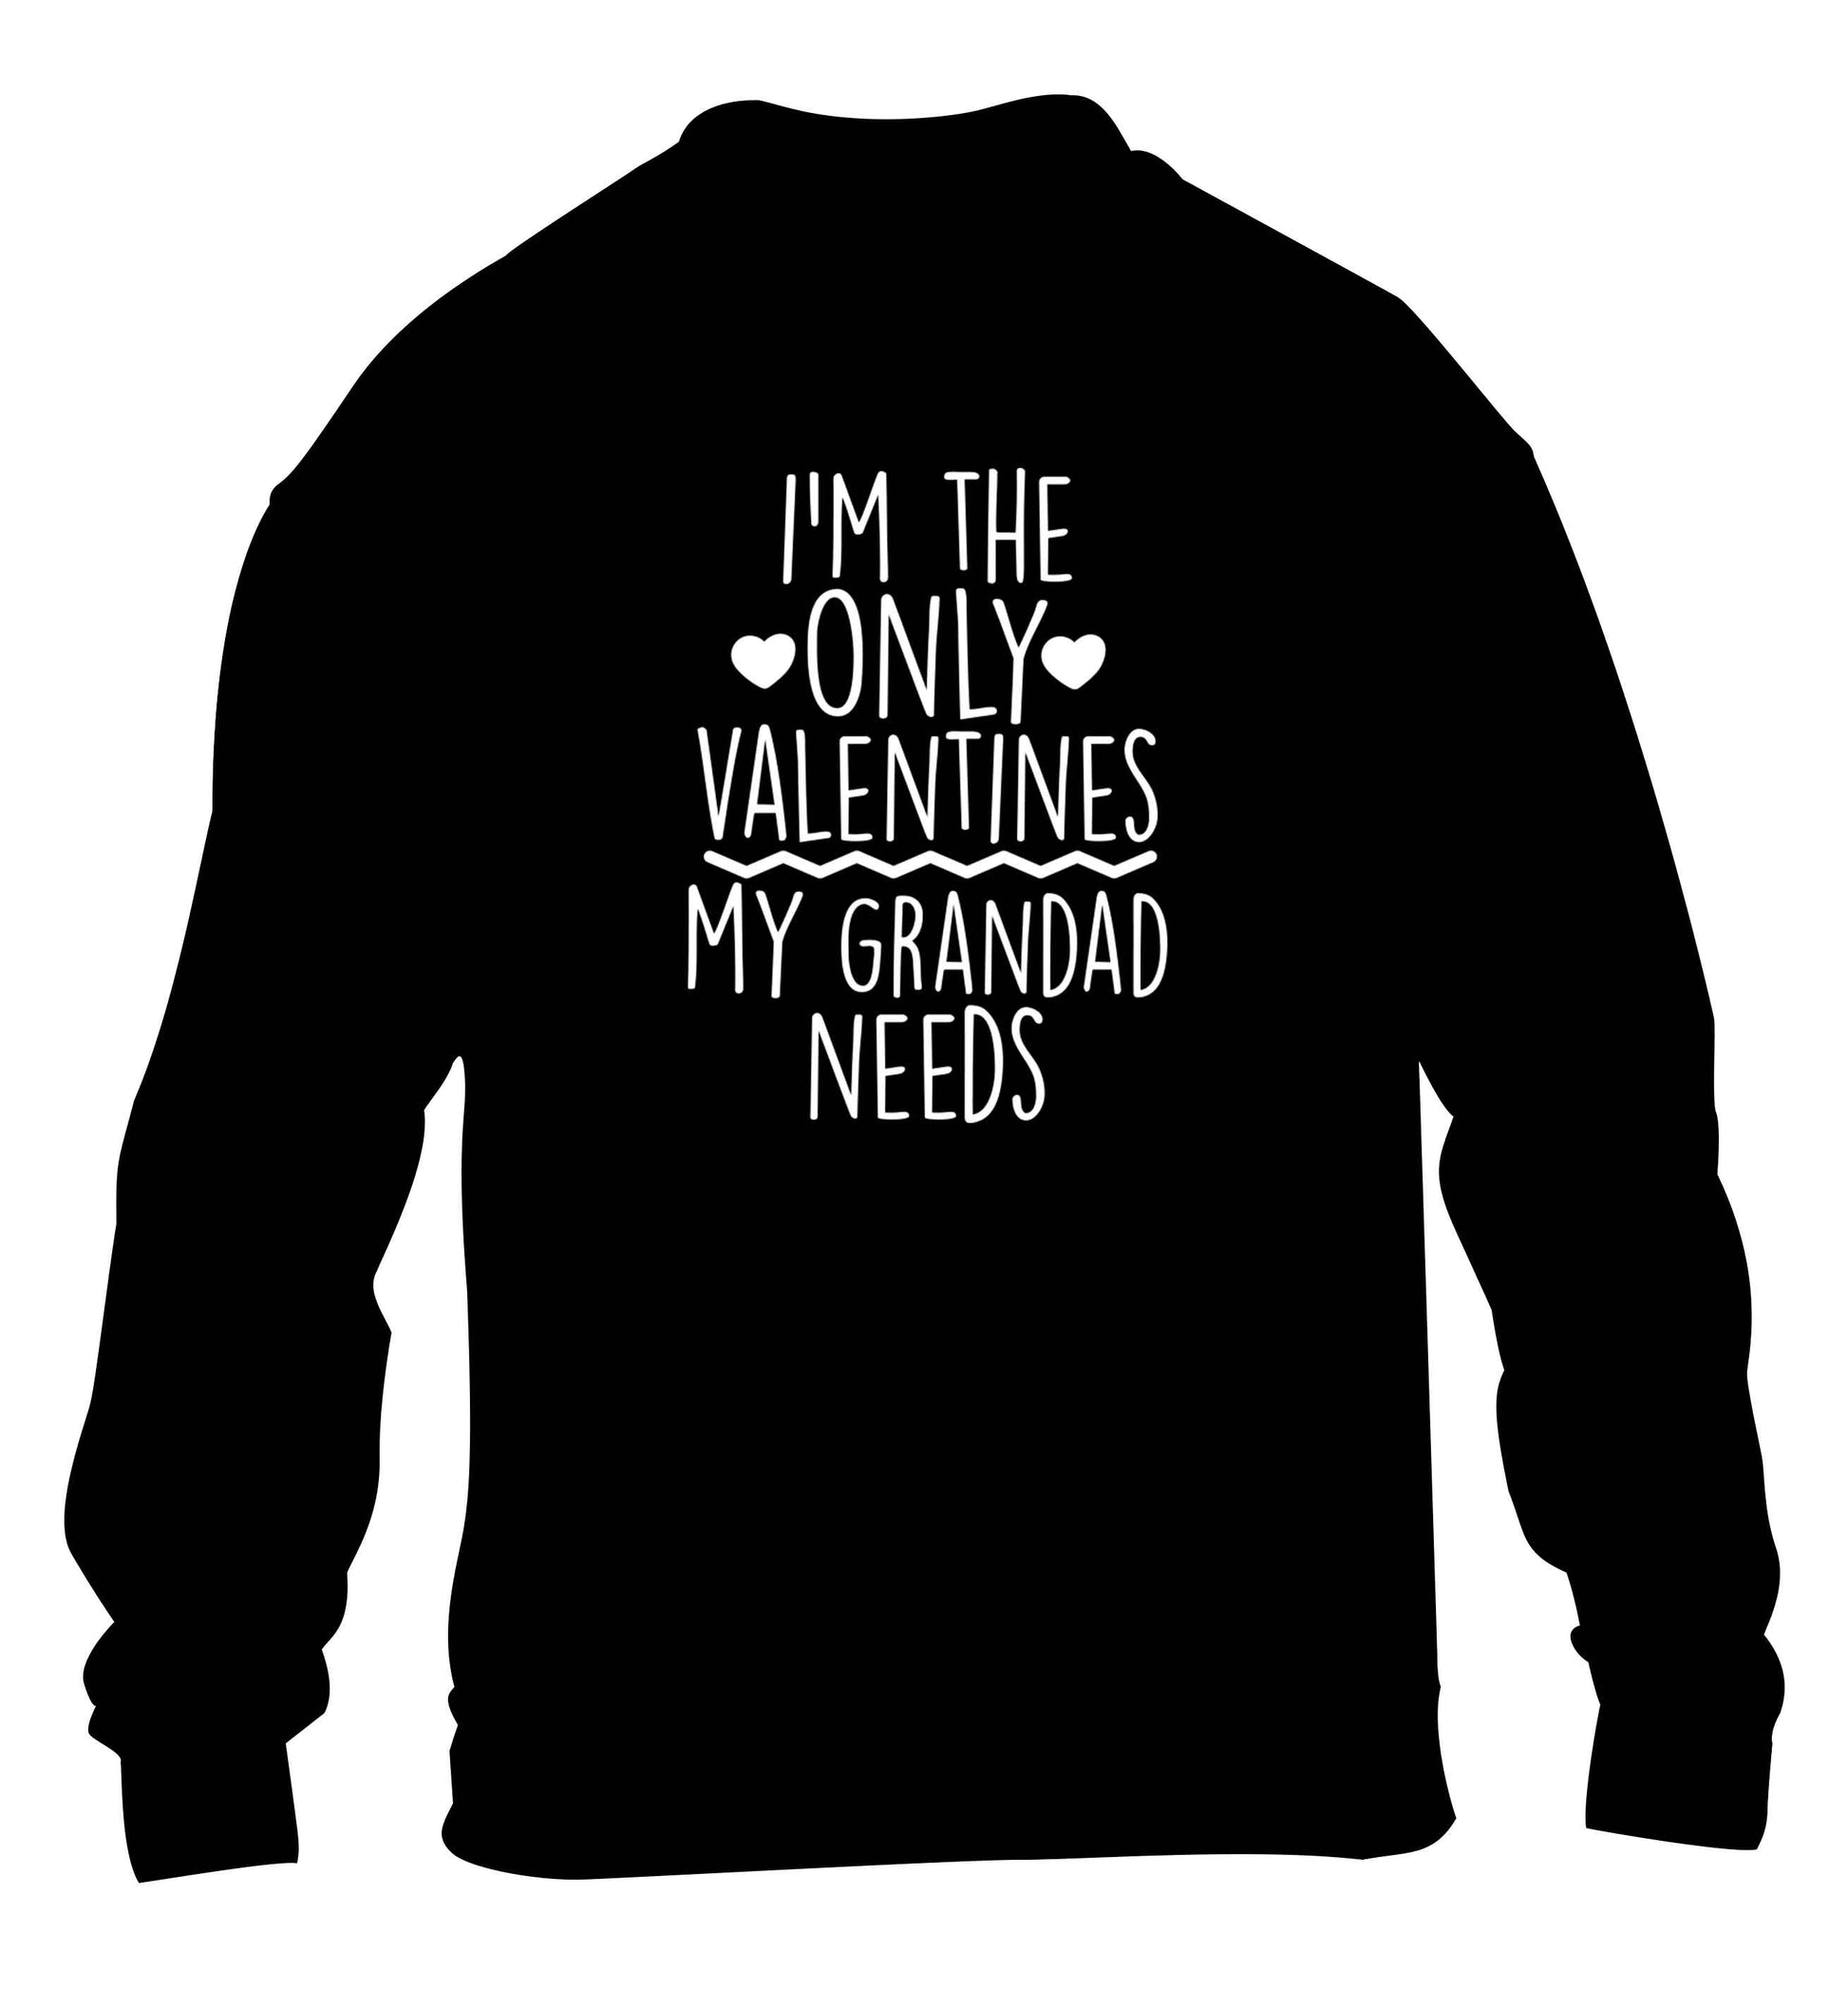 I'm the only valentines my grandad needs children's black sweater 12-13 Years